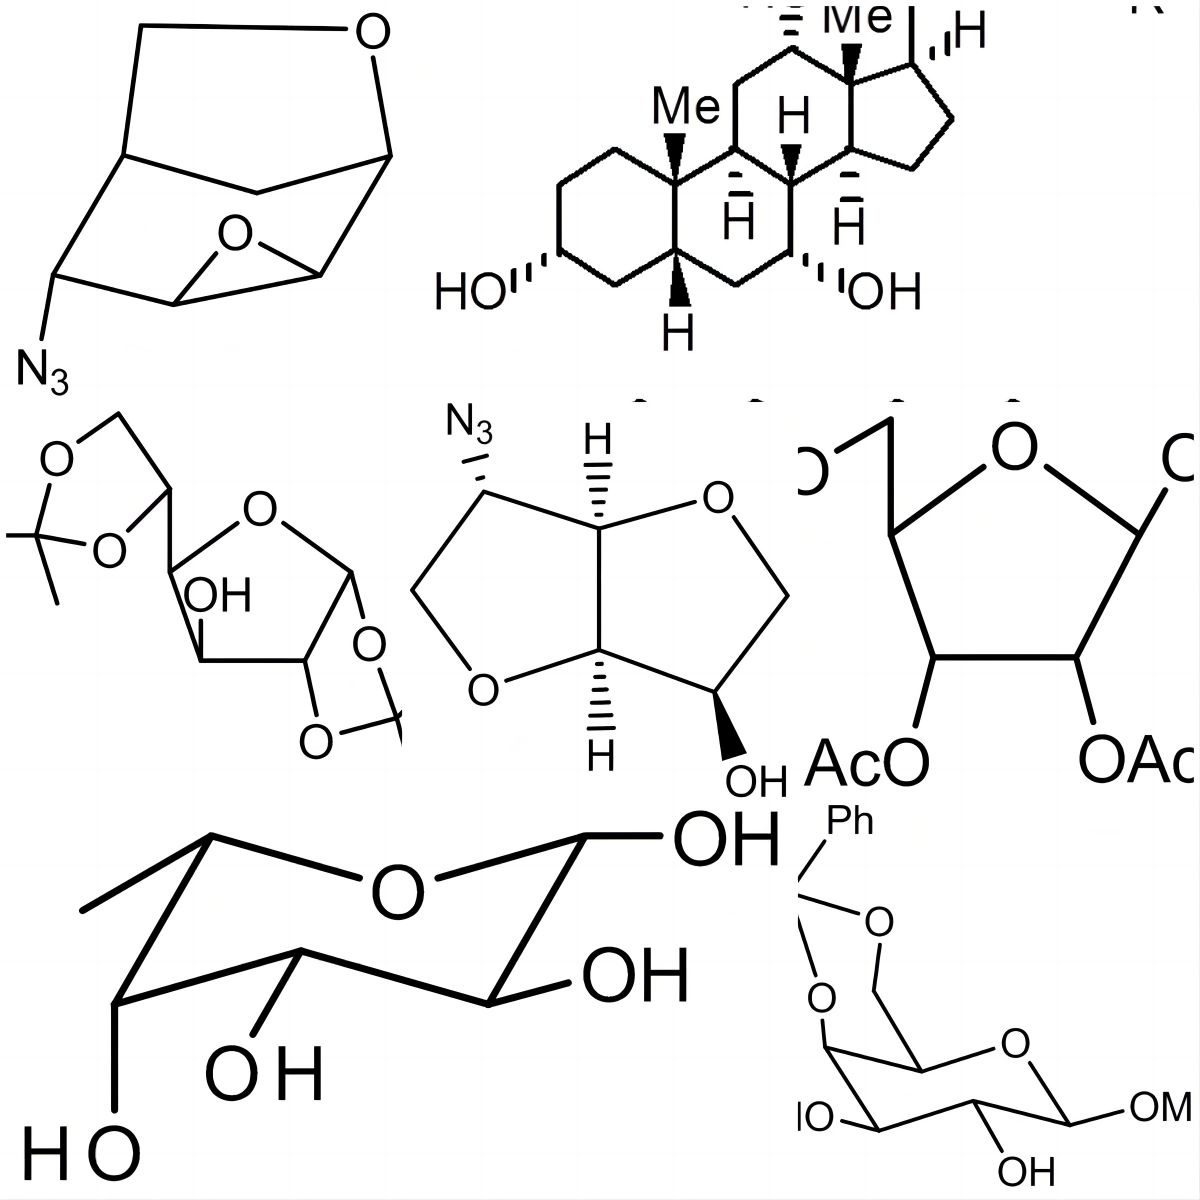 n-Decyl β-D-glucopyranoside (DG) > 99% highly purified